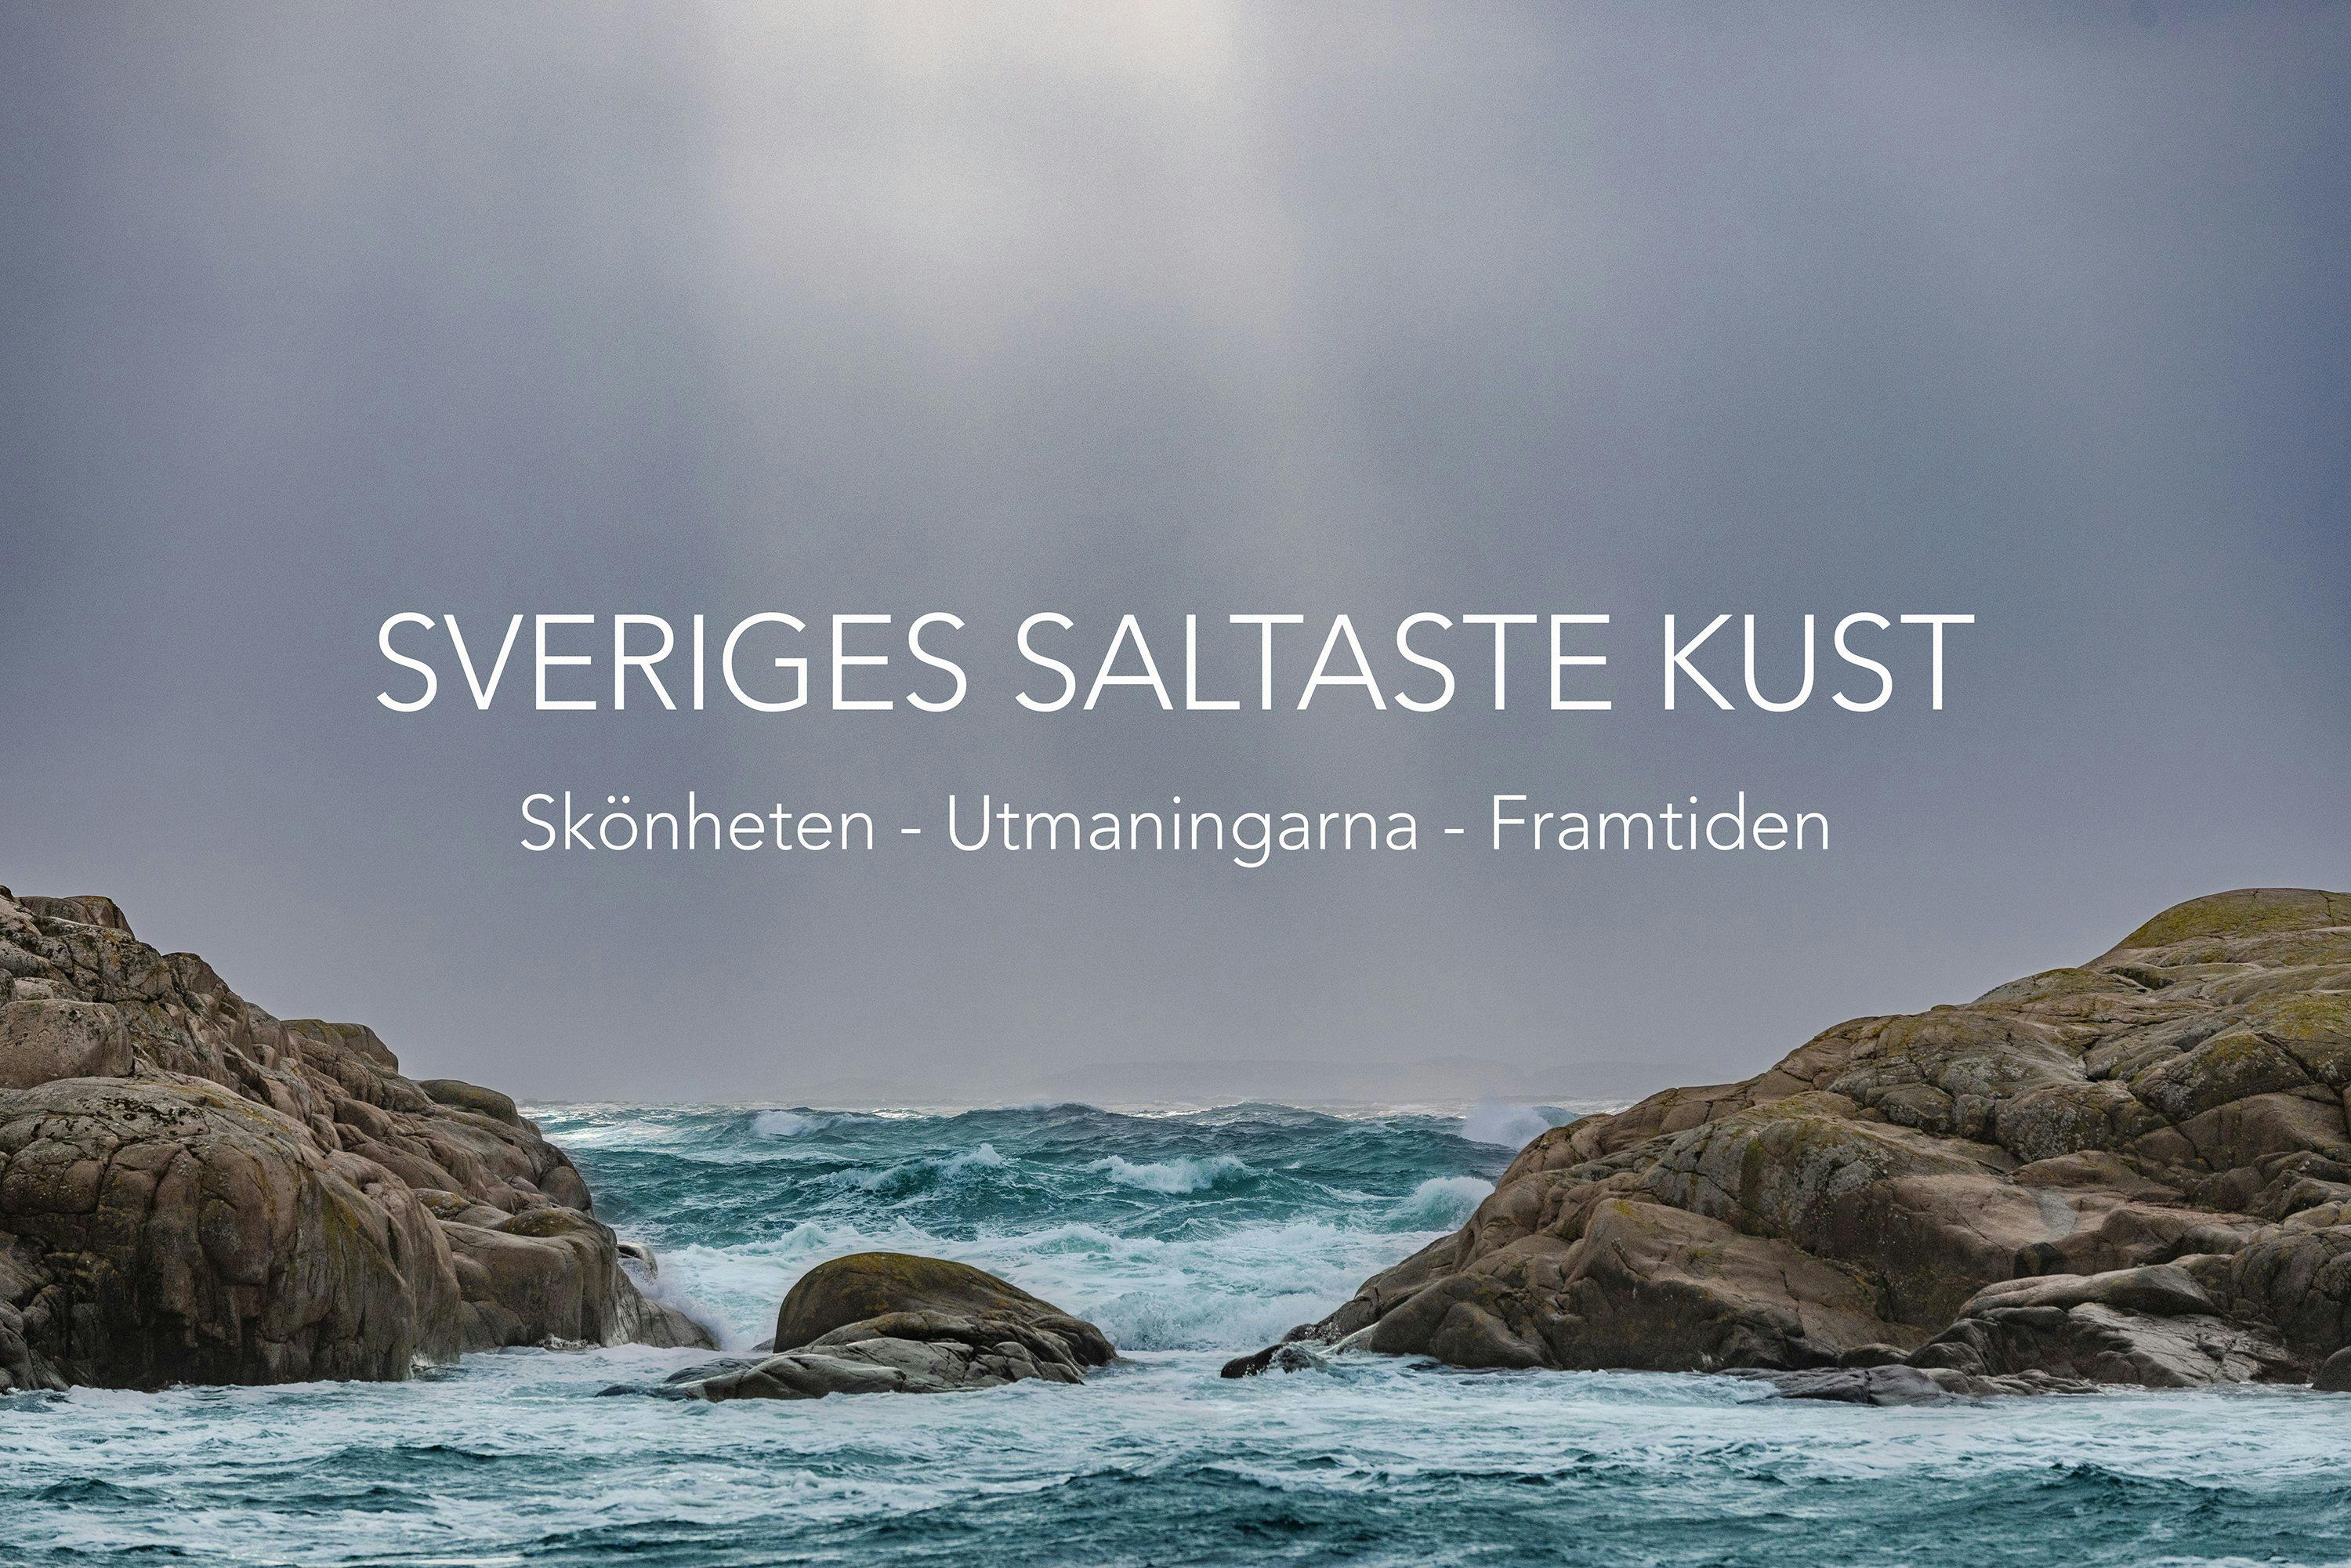 Havet, samt texten "Sveriges saltaste kust"